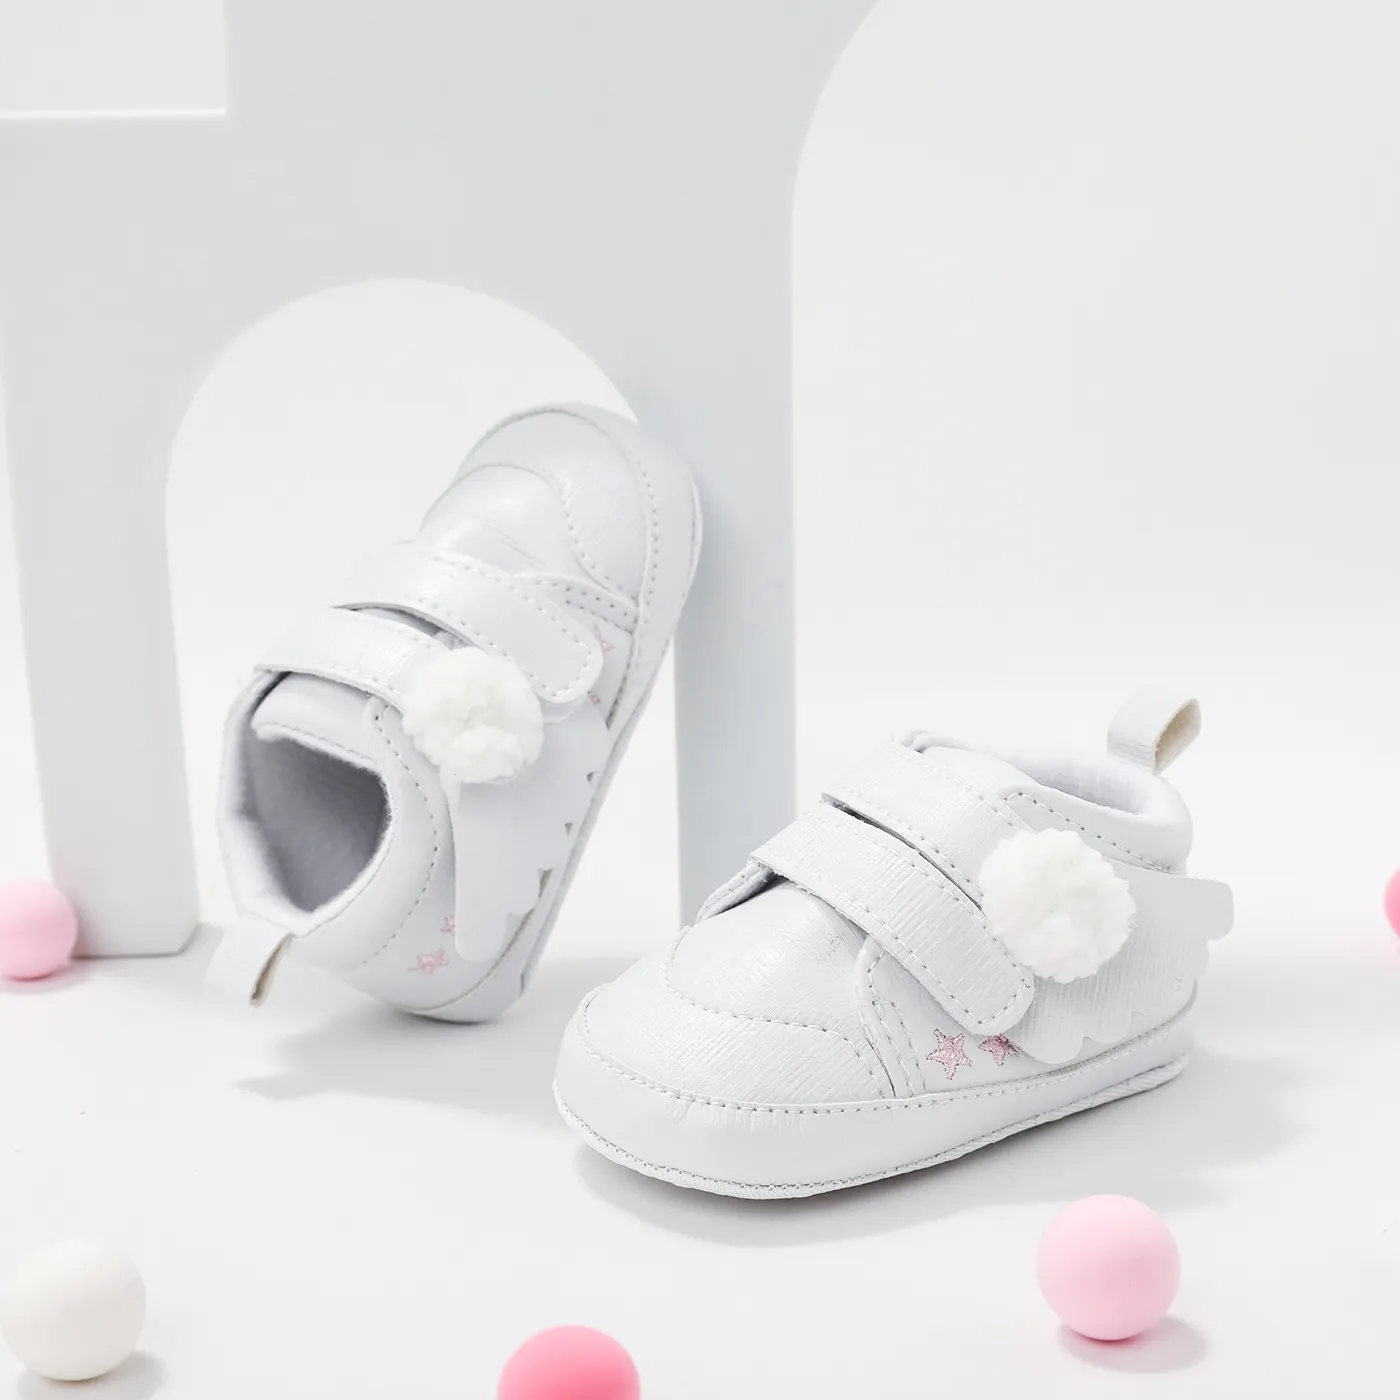 Baby/Toddler Stars Print Velcro Prewalker Shoes